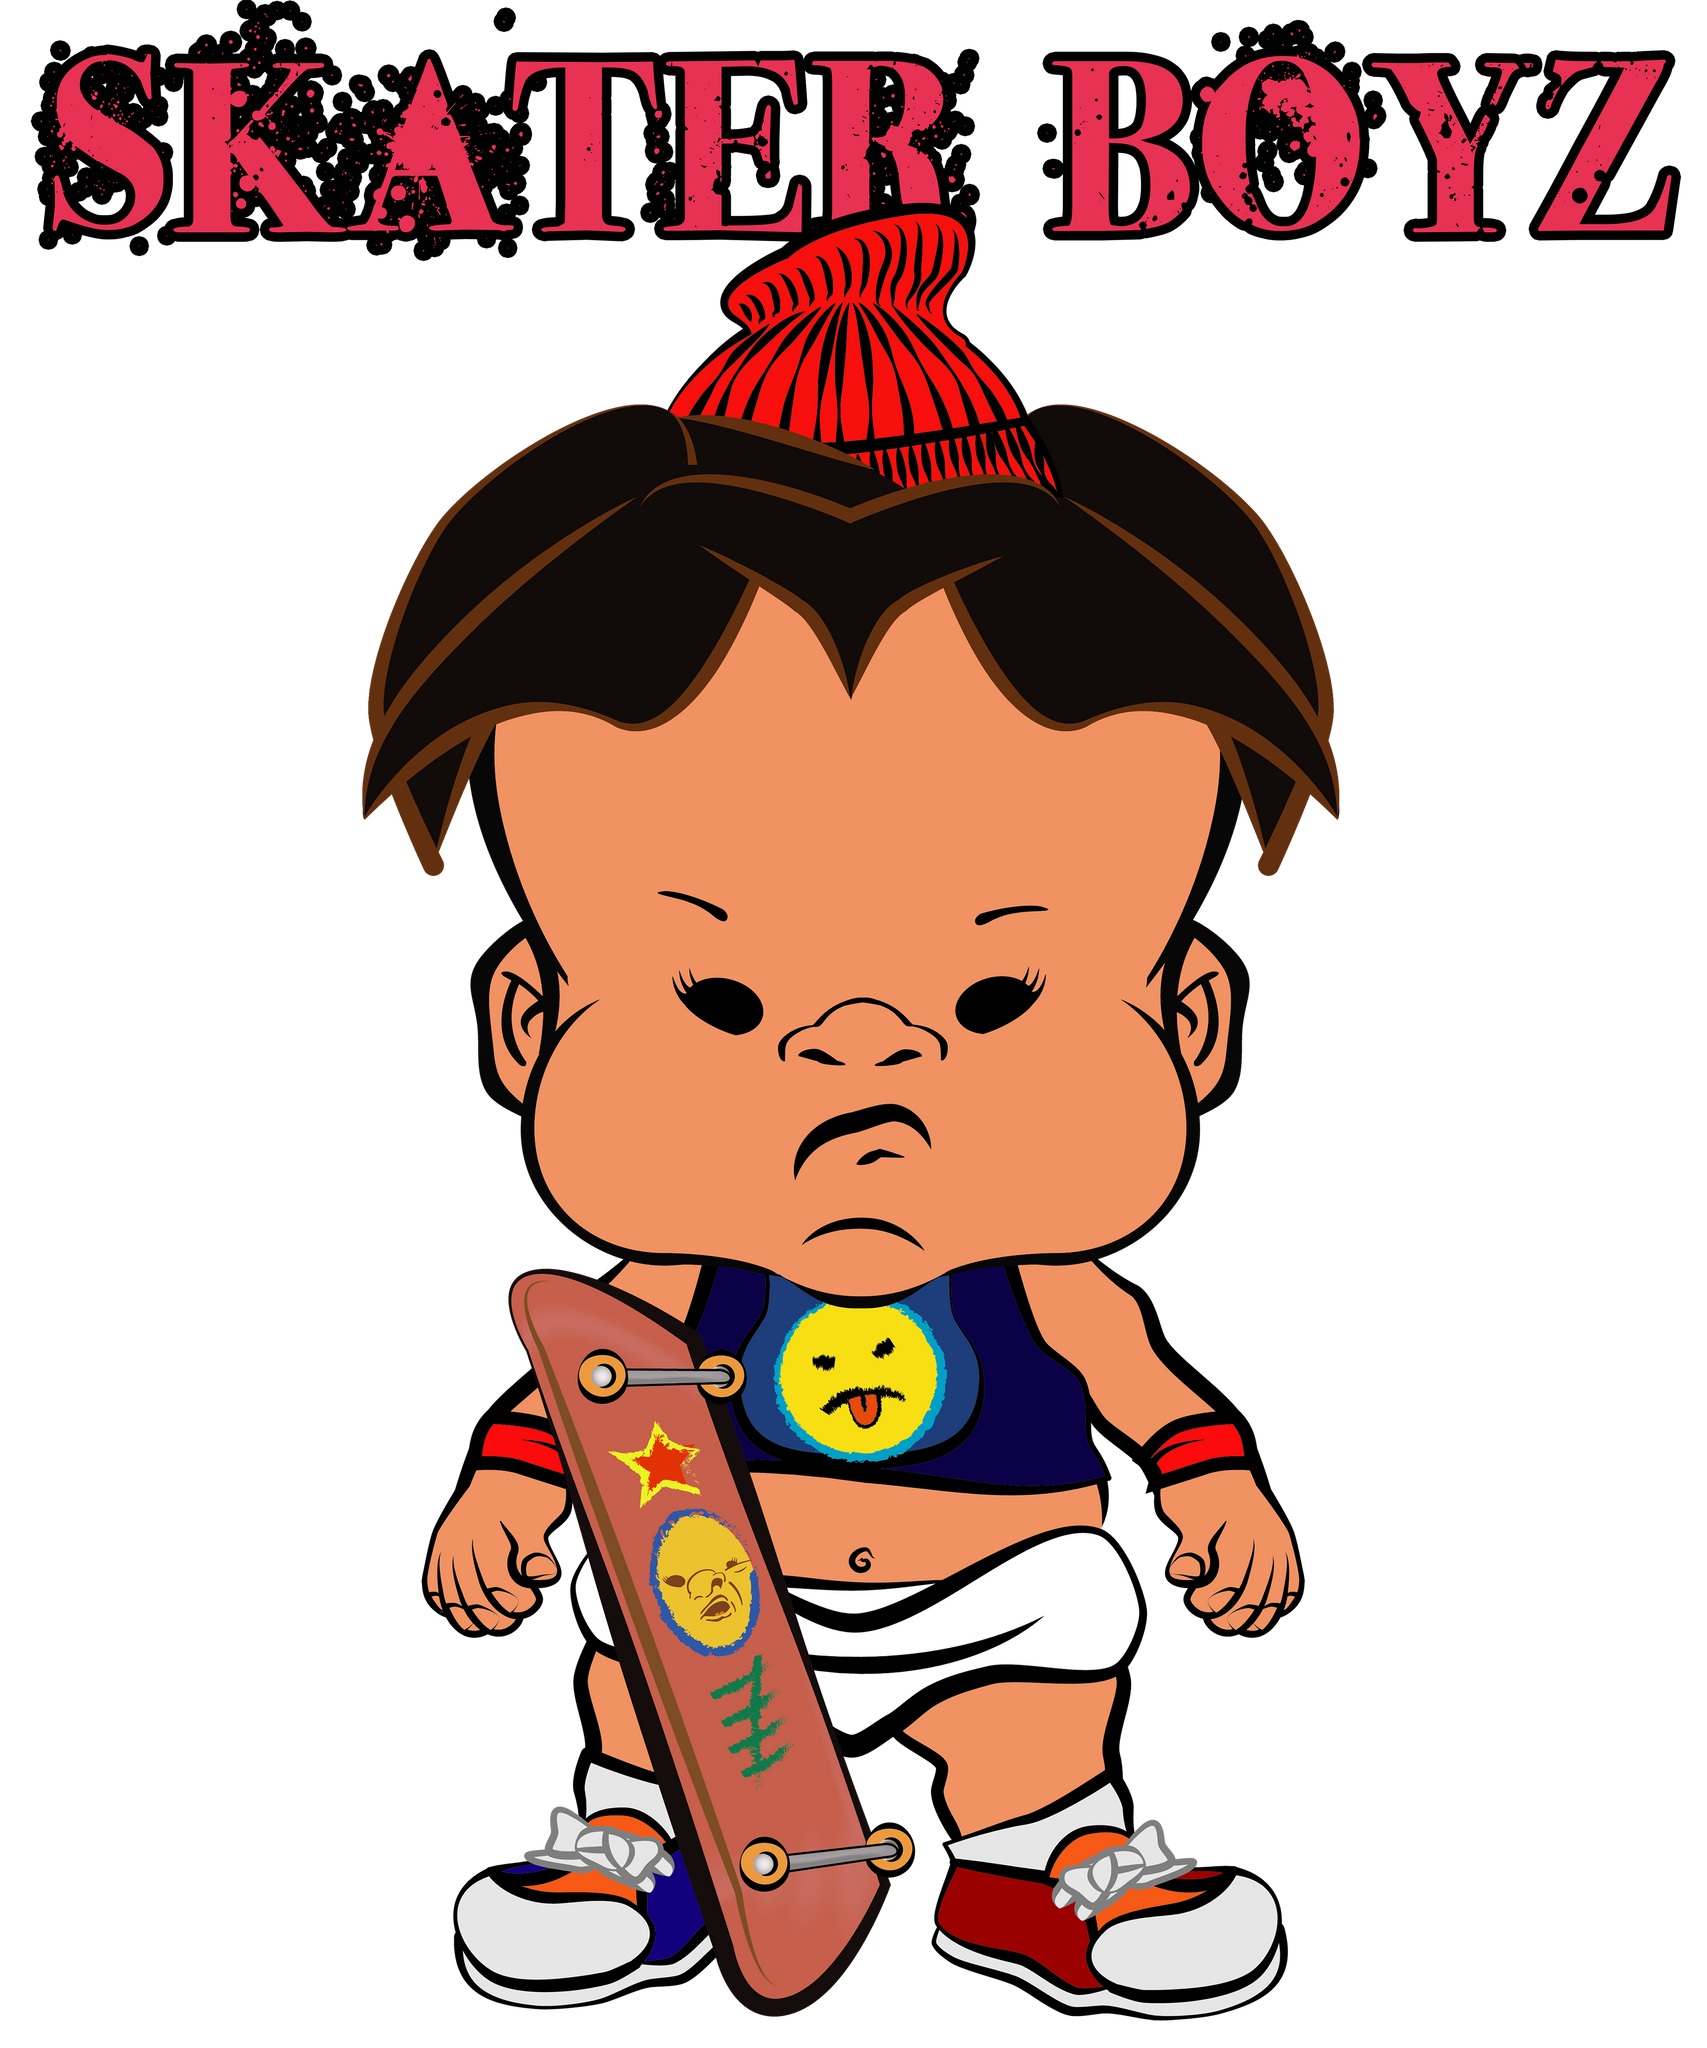 PBLZ0955_Skaterz_skater boyz_boy_9